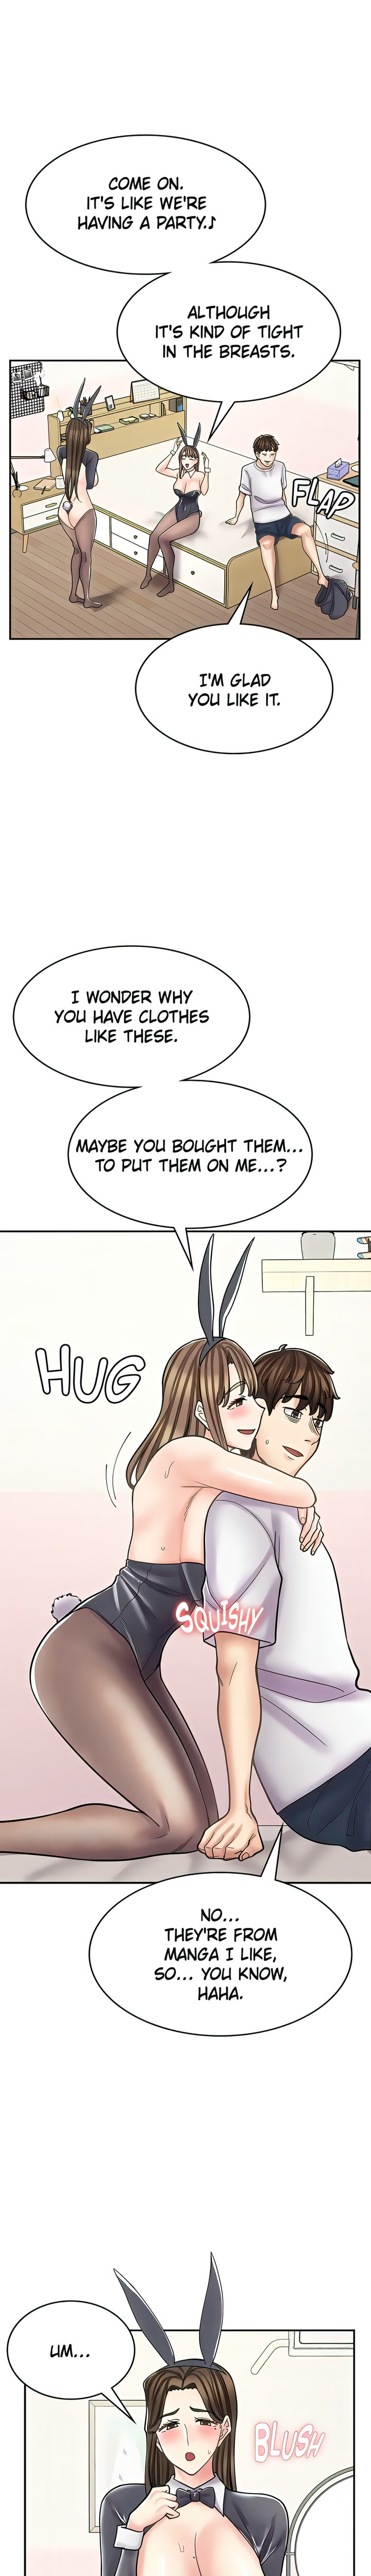 Erotic Manga Café Girls - Chapter 42 Page 4